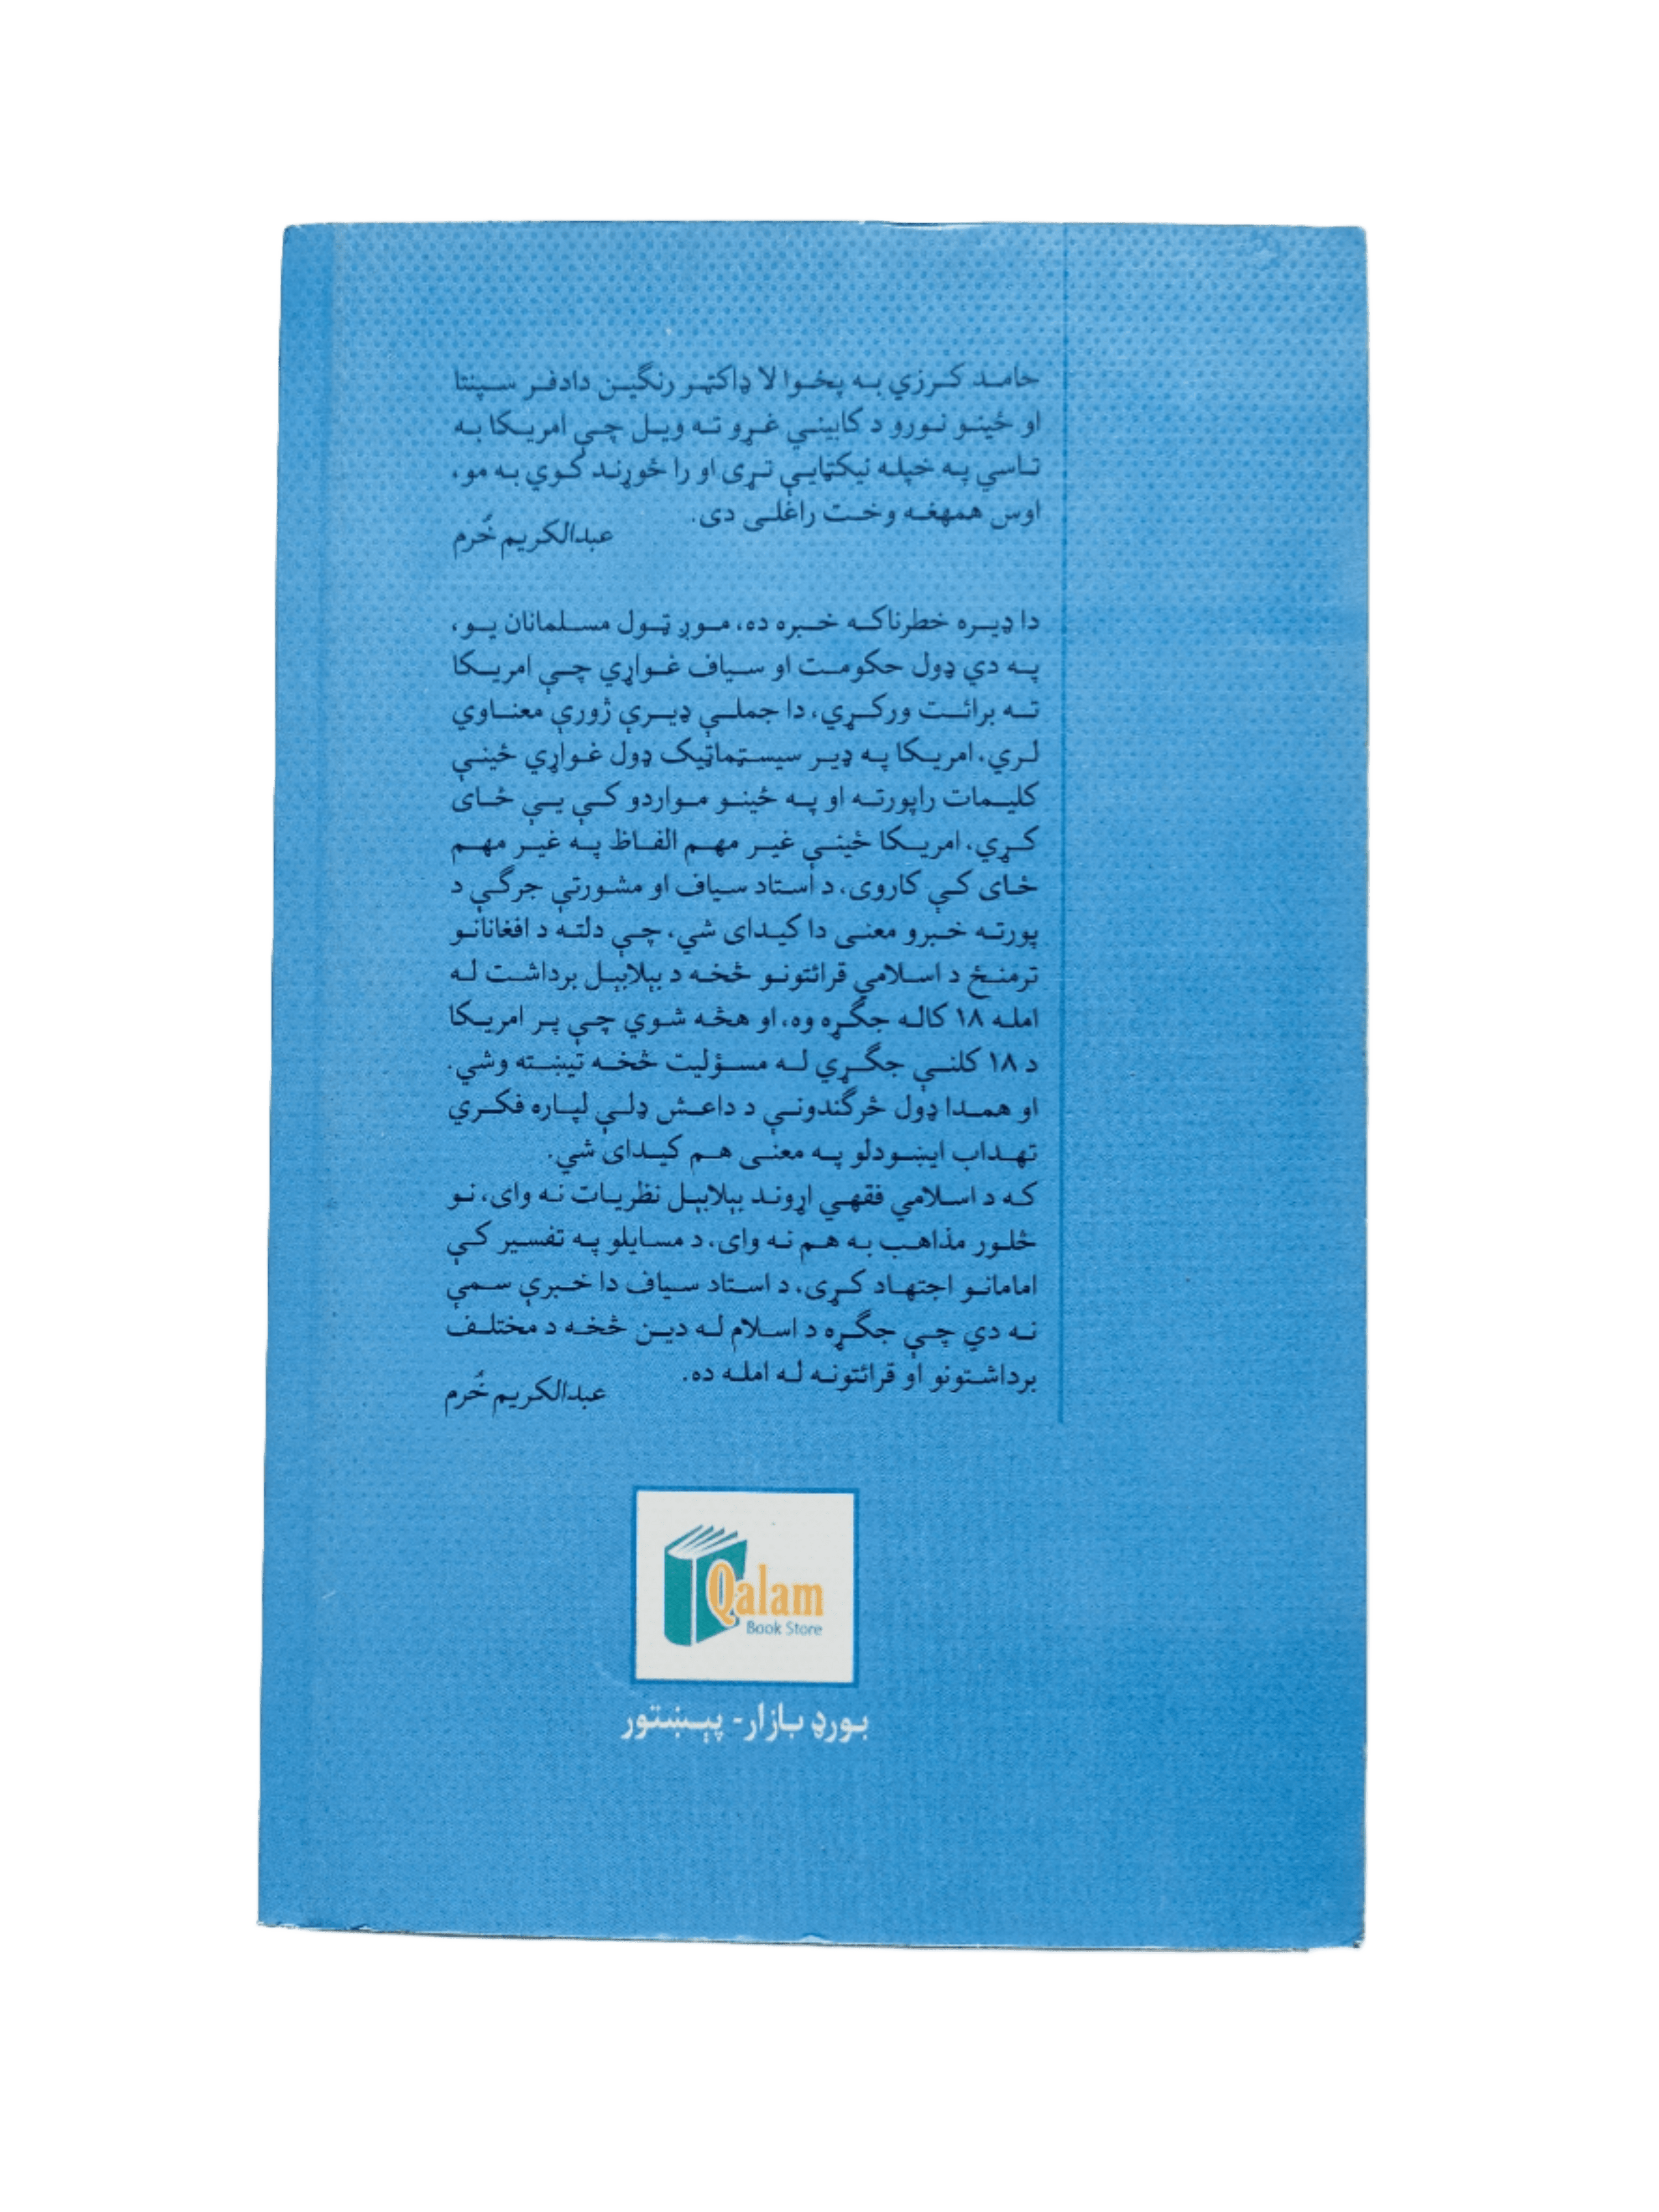 Da Qatar Bain-ul-Afghani Ghonda (Qatar Inter-Afghan Meeting) - KHAJISTAN™